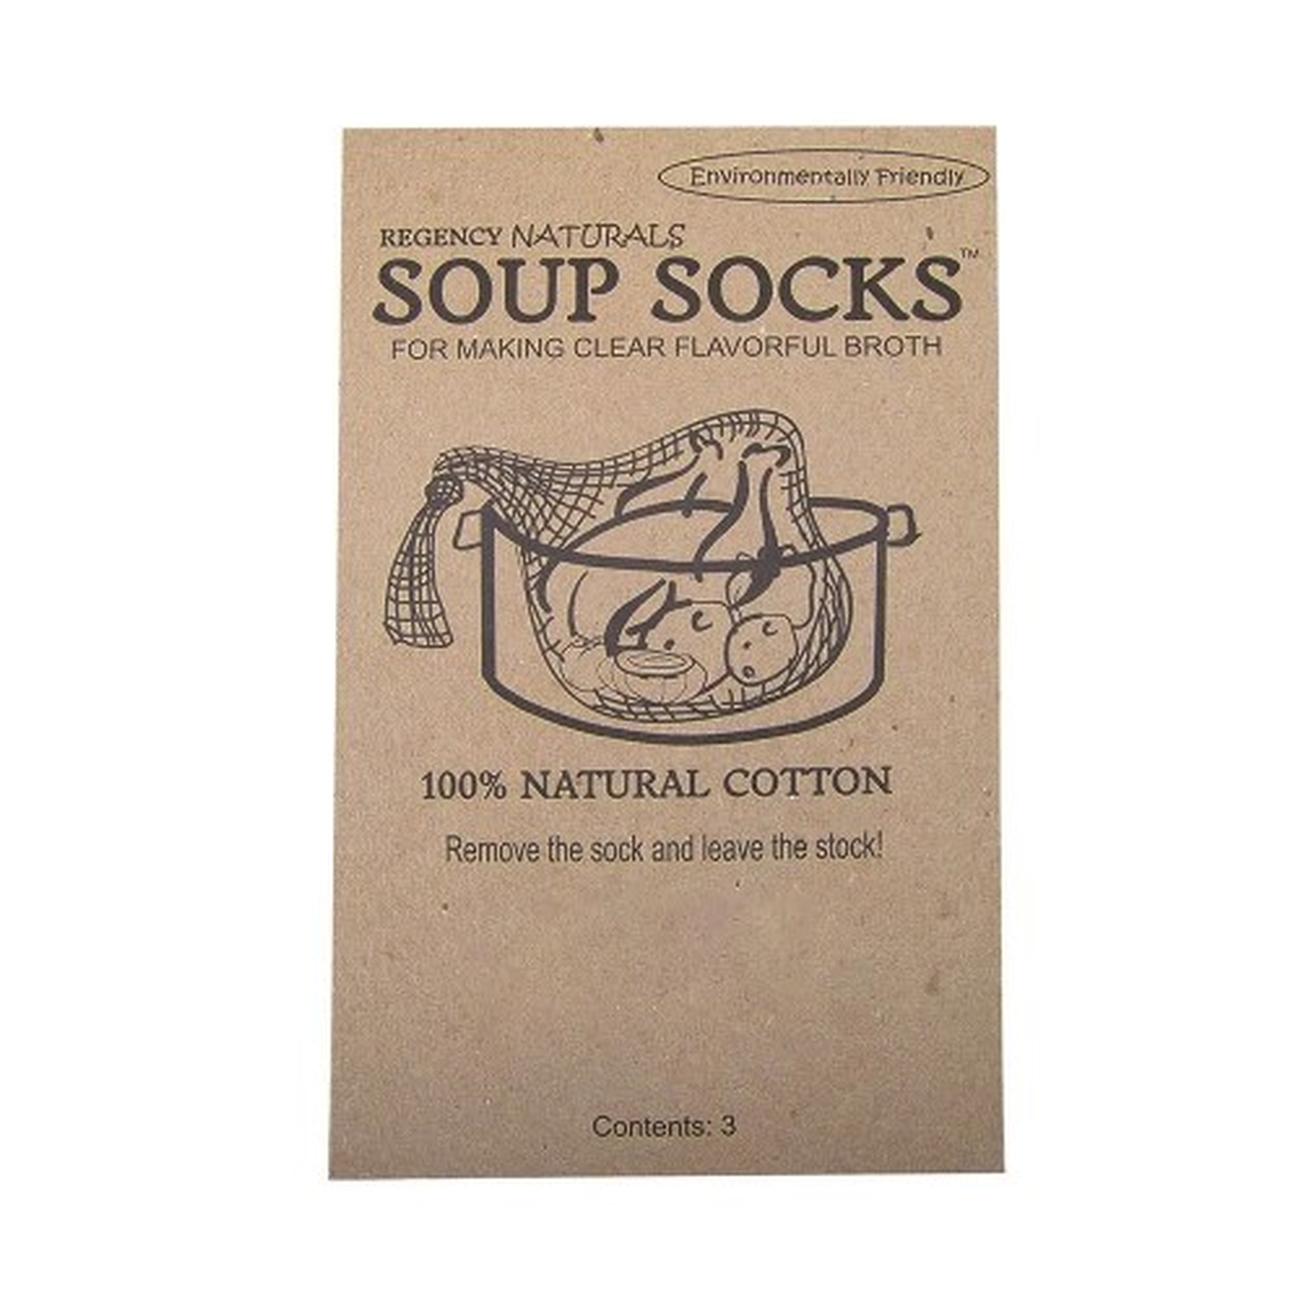 regency-naturals-soup-socks-3pc-eddingtons - Regency Naturals Soup Socks 3pc